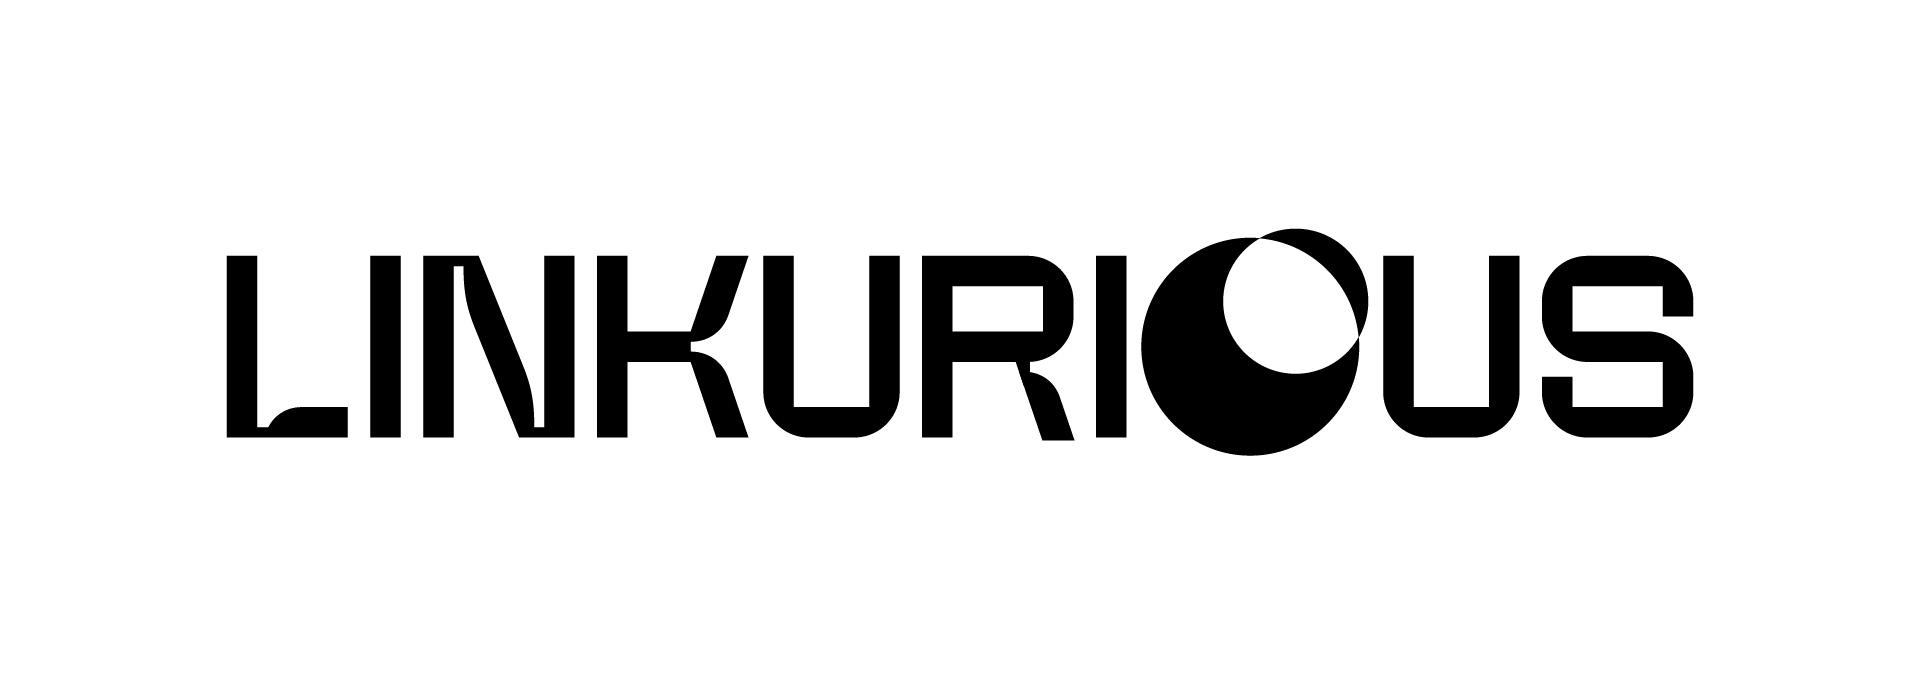 Linkurious Logo_Black_With Margins